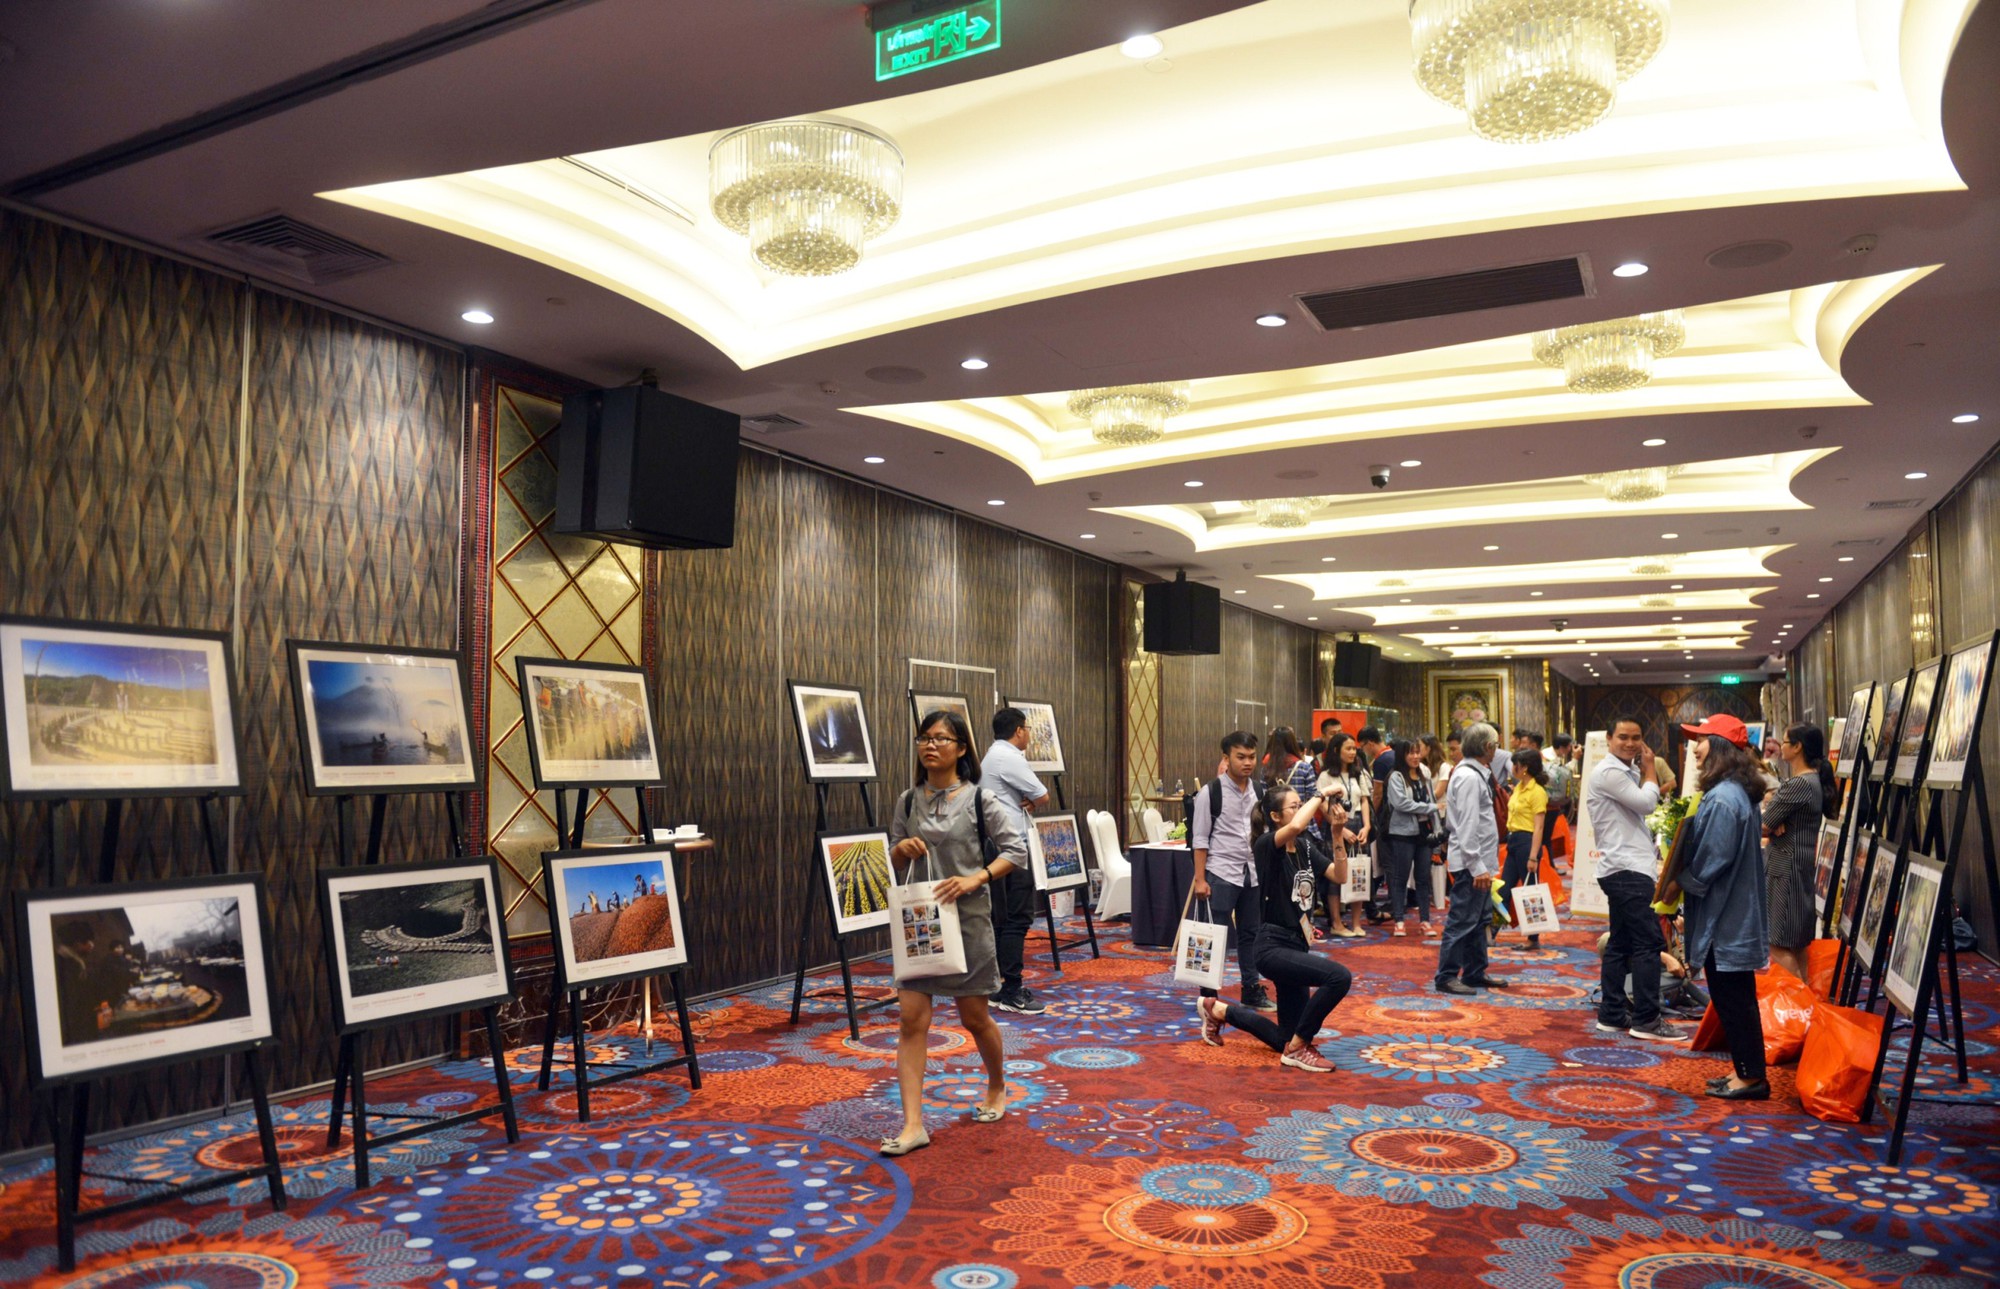 One-hundred photos are displayed at the award ceremony of the Vietnam Heritage Photo Awards 2017 in Ho Chi Minh City, November 21, 2017. Photo: Tuoi Tre